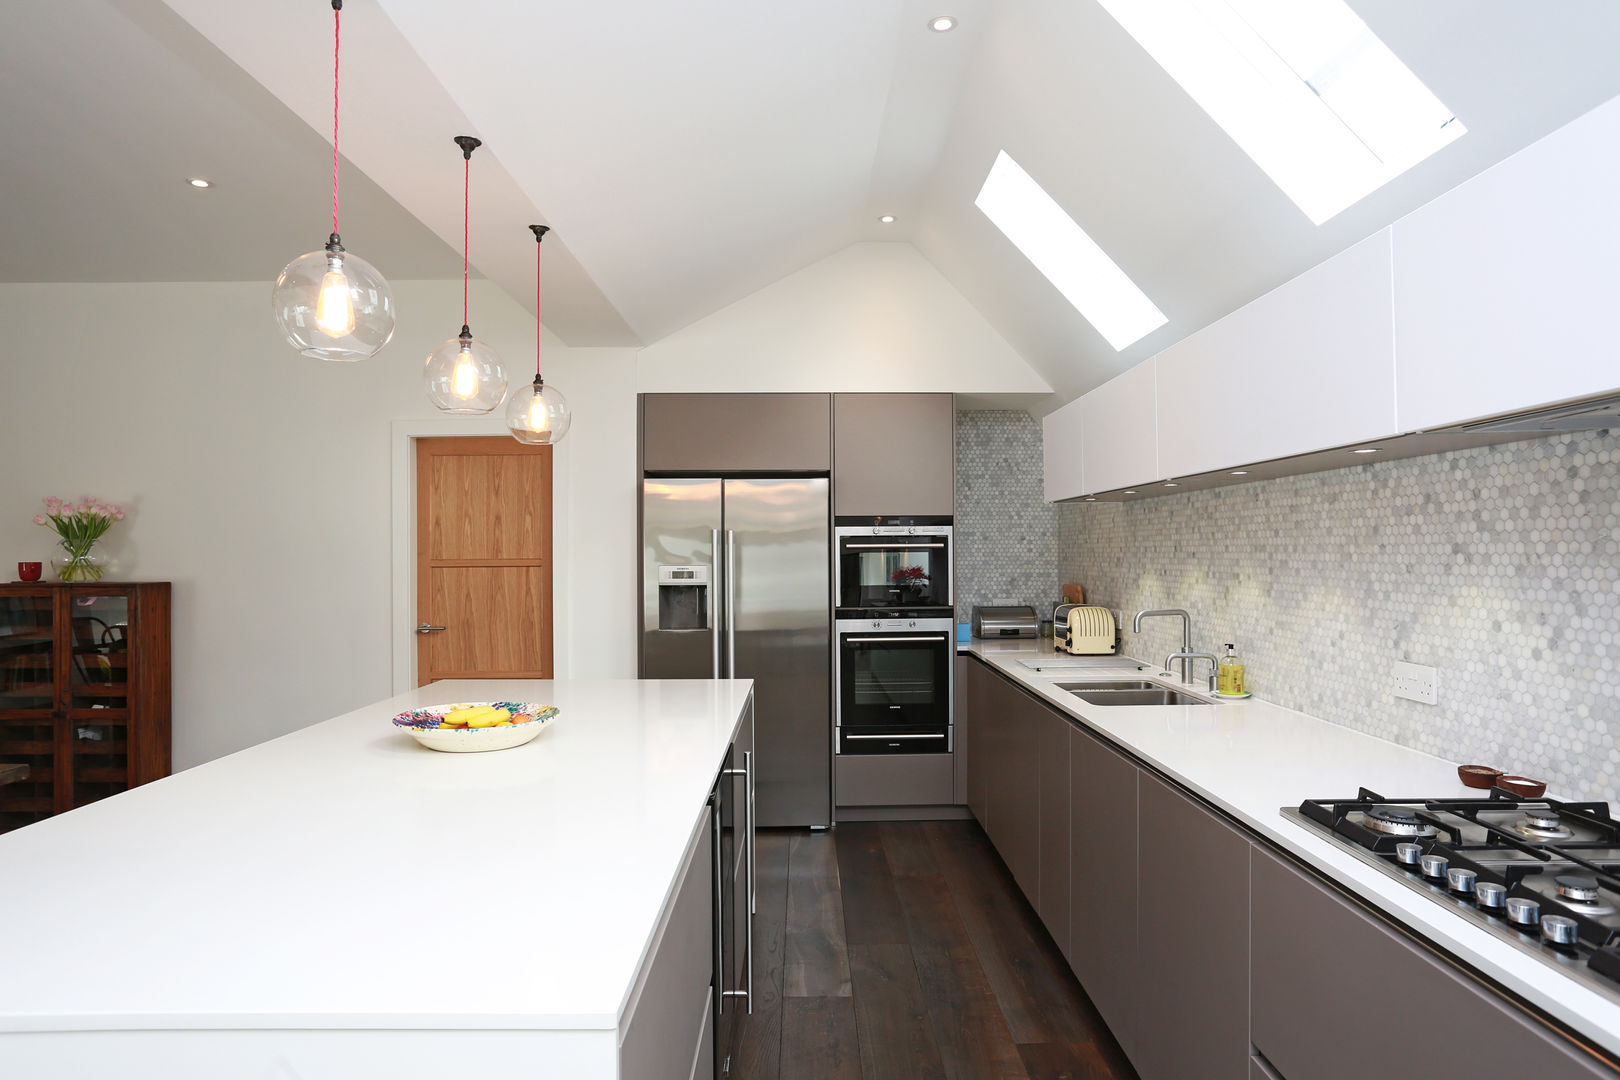 Basalt grey and Polar white satin lacquer kitchen​ LWK London Kitchens Cocinas modernas